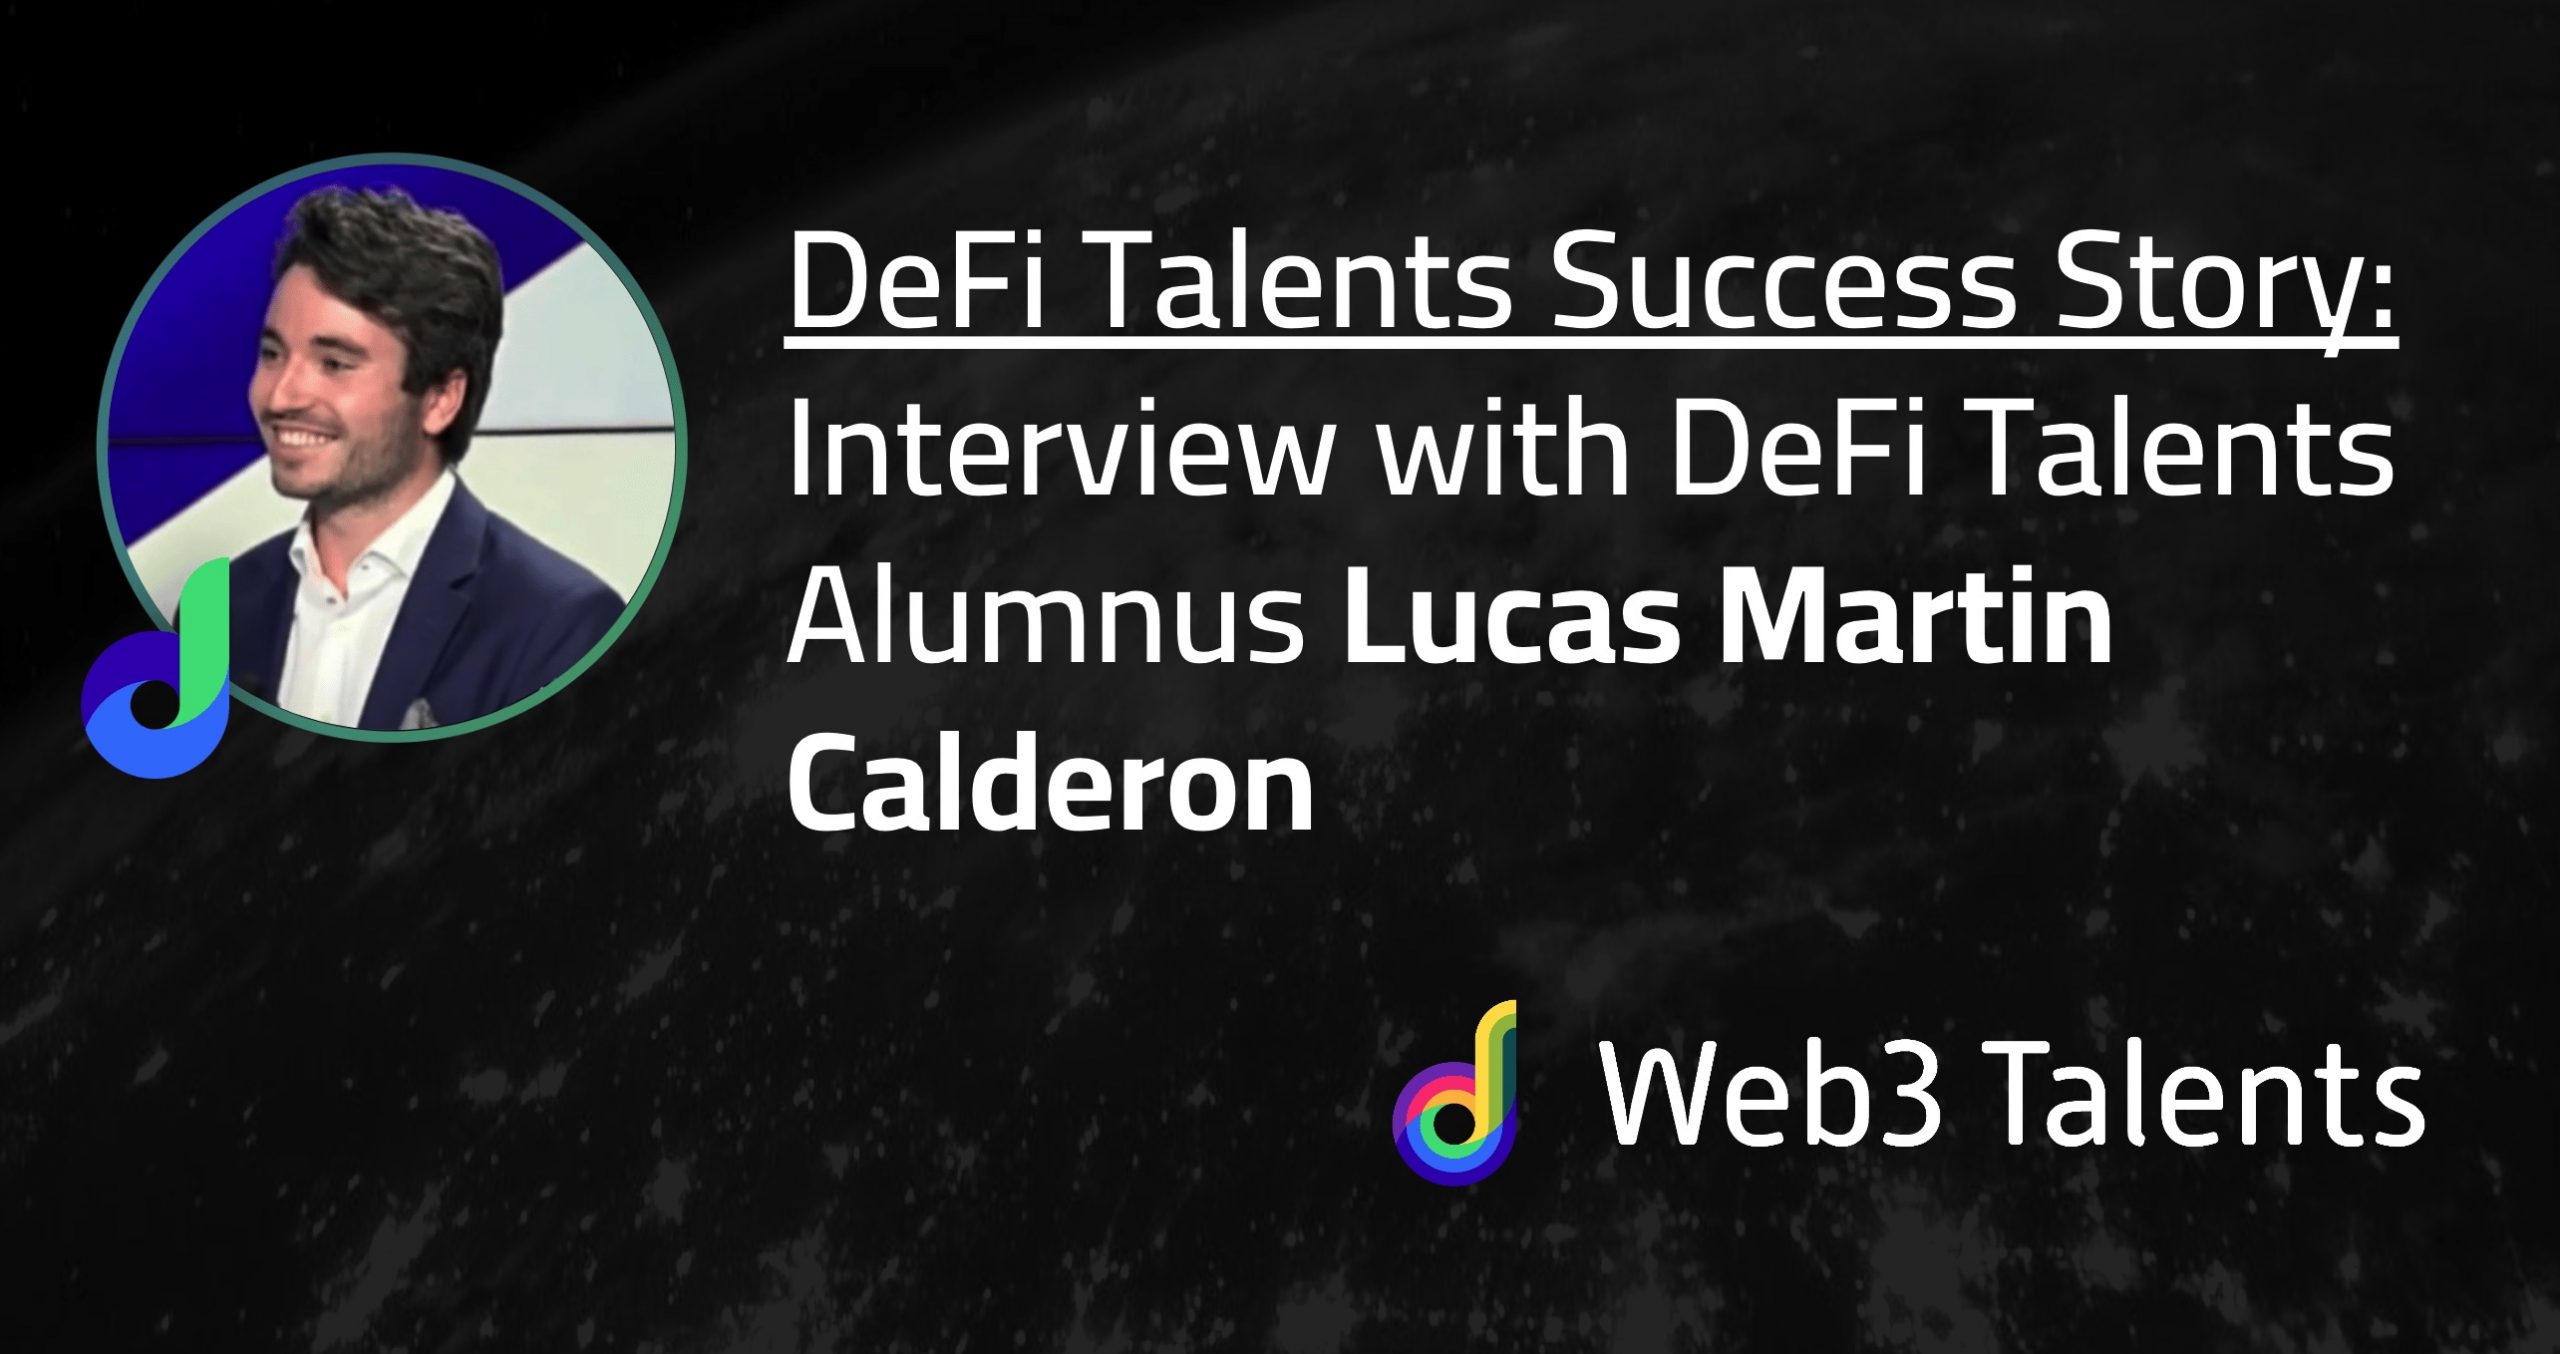 DeFi Talents Success Story with Lucas Martin Calderon